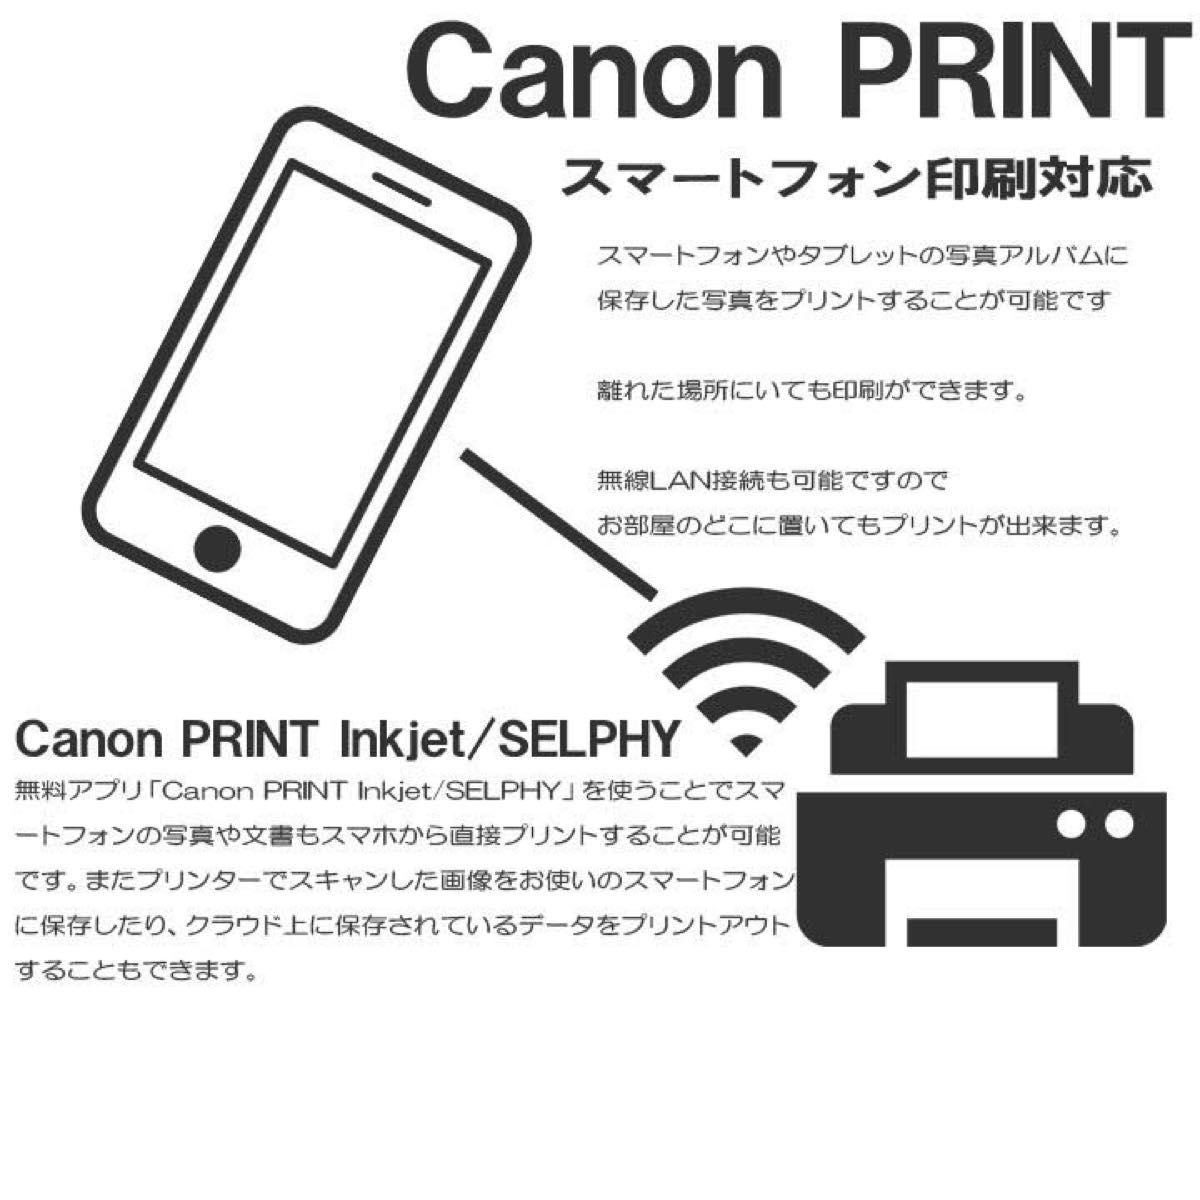 TS3530 キャノン プリンター 本体 CANON PIXUS 新品未使用 コピー機 複合機 スキャナー 印刷機 CM34